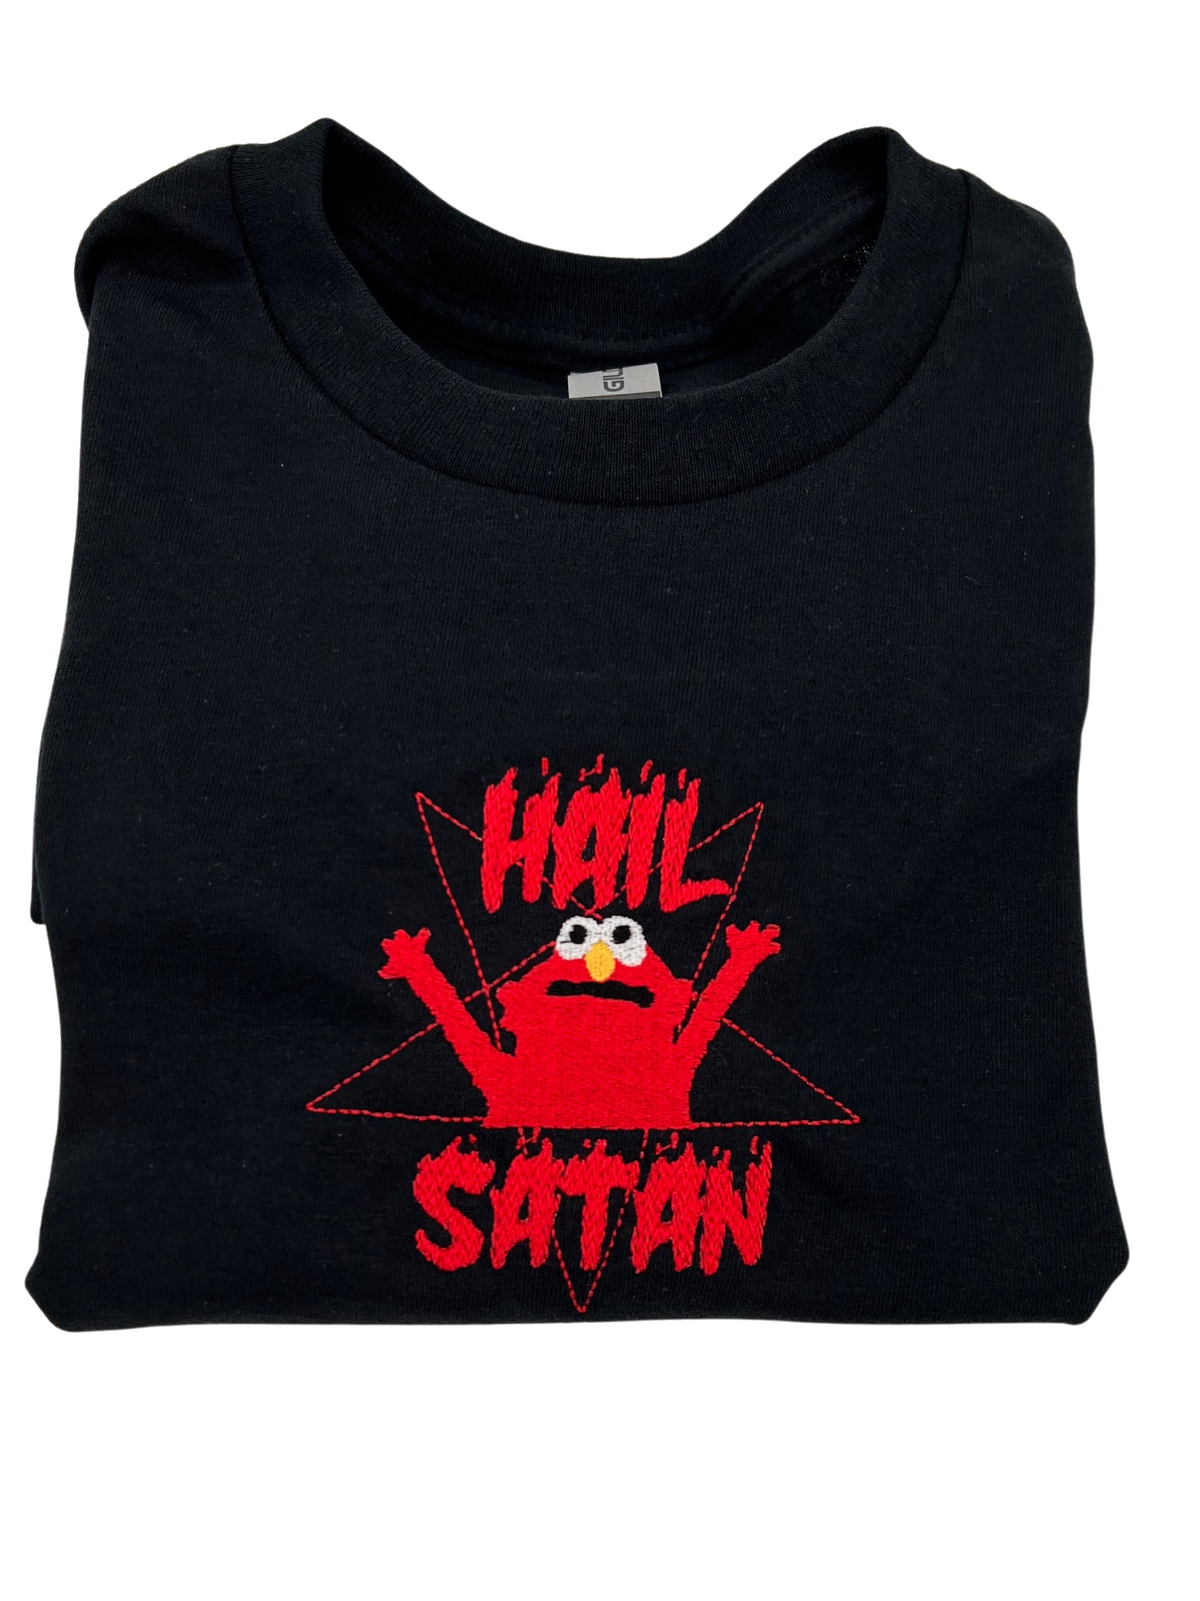 Hail Satan Embroidered Tee